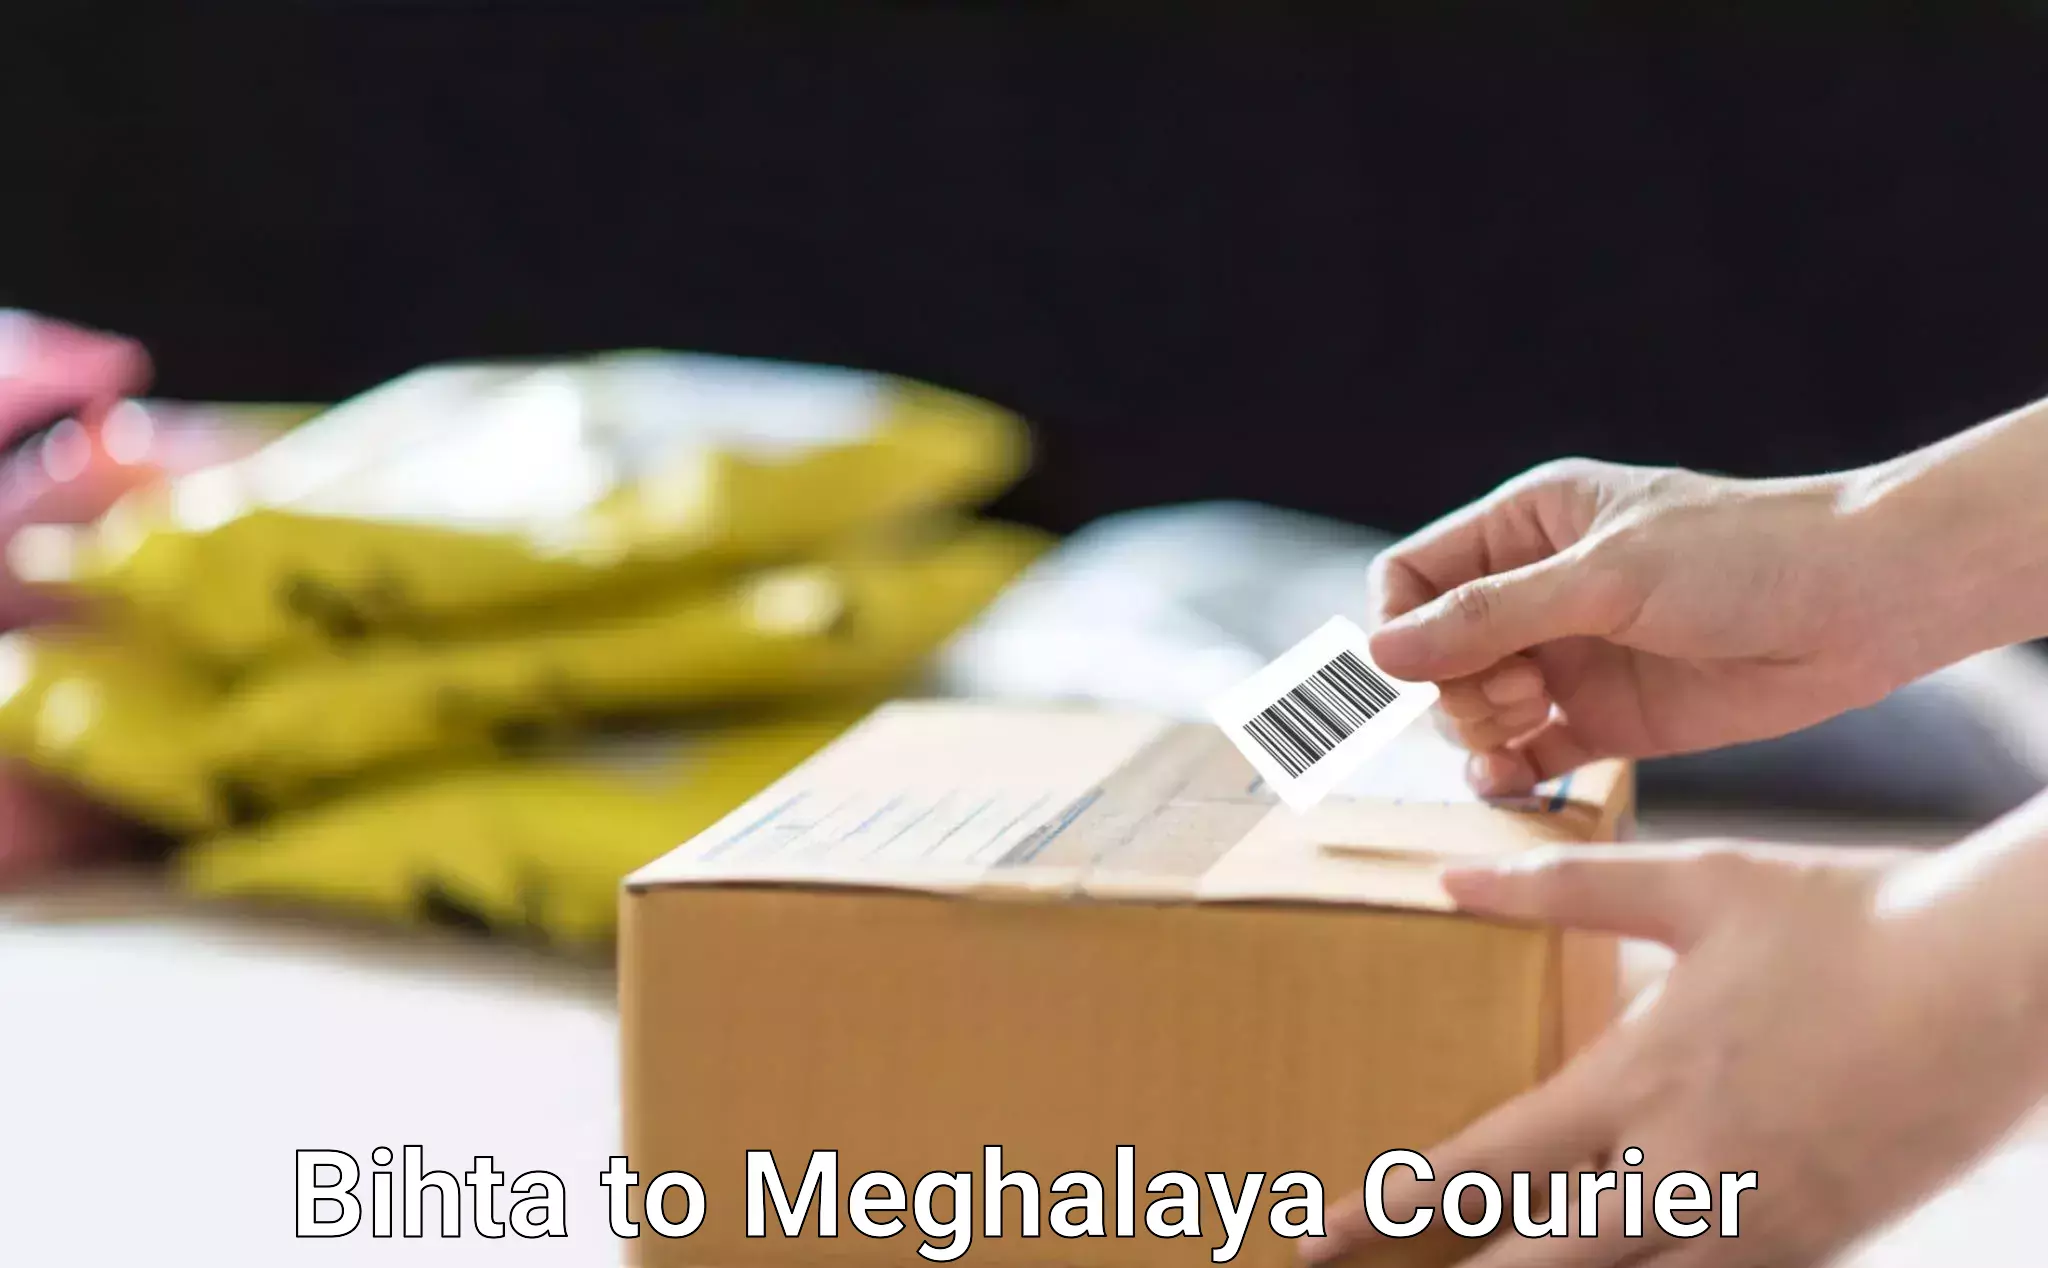 Specialized moving company Bihta to Meghalaya